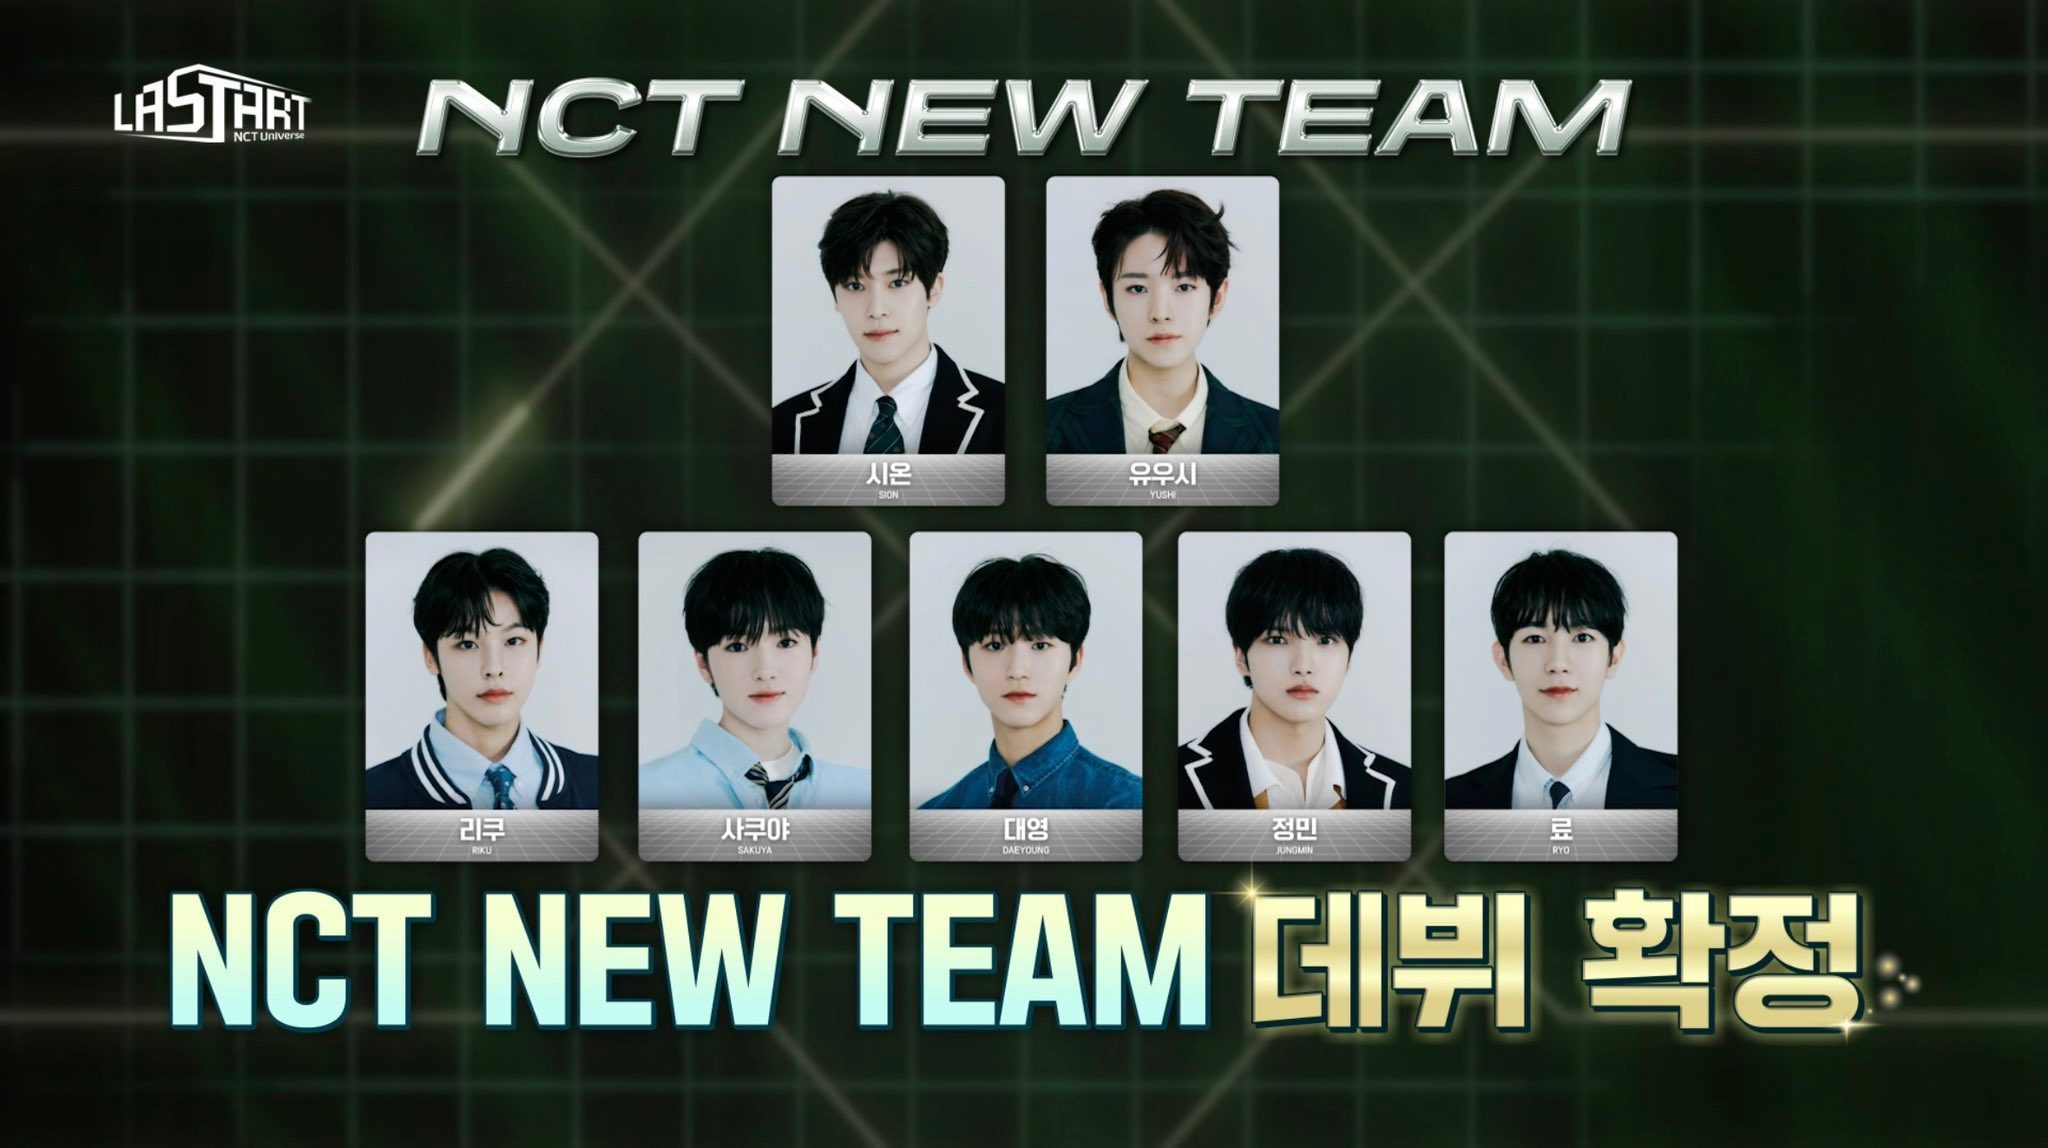 LOOK: ‘NCT Universe: LASTART’ announces members of final NCT unit